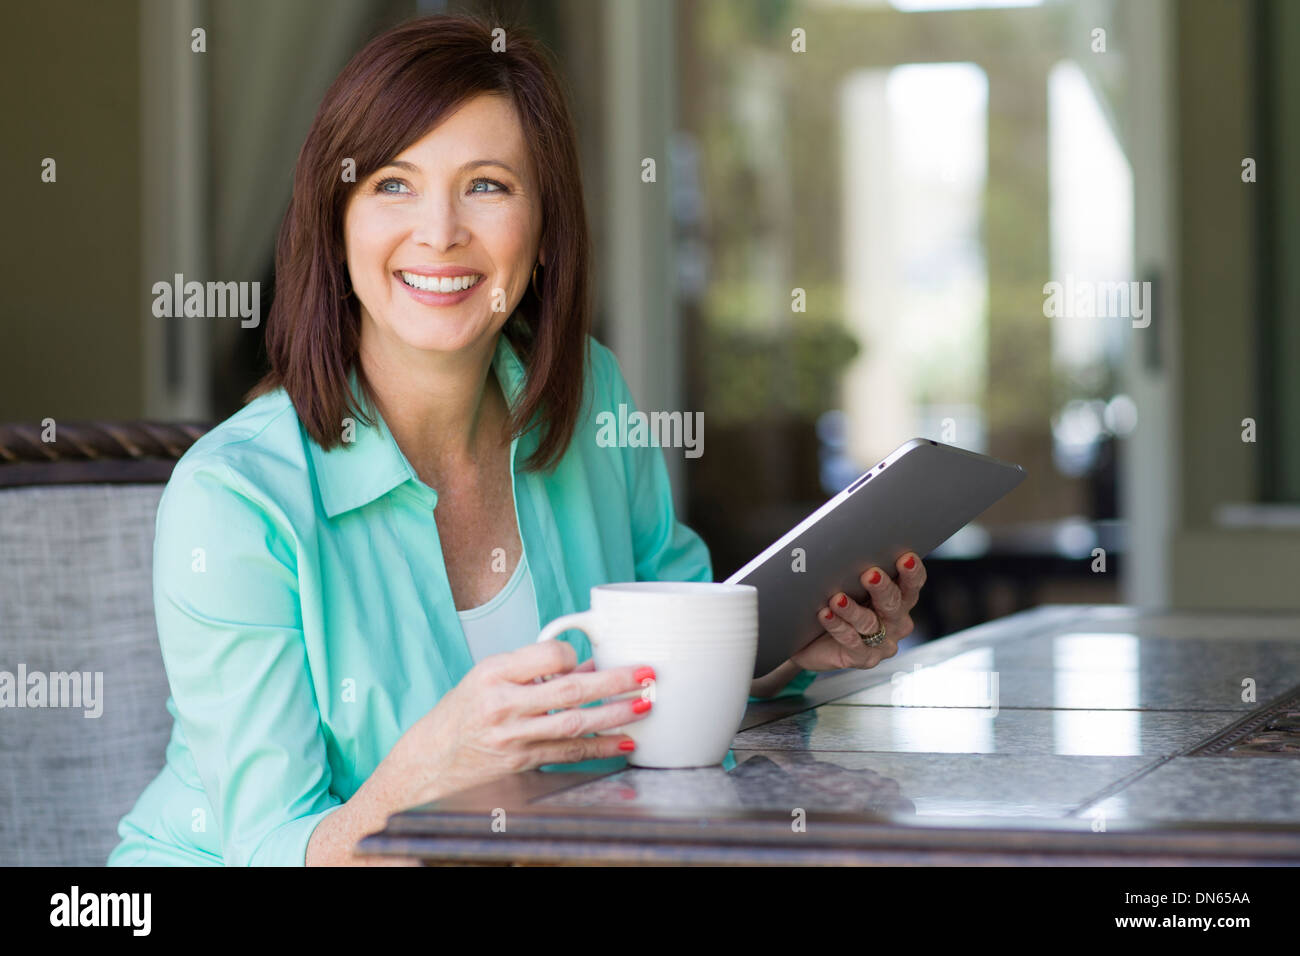 Caucasian woman using digital tablet Stock Photo